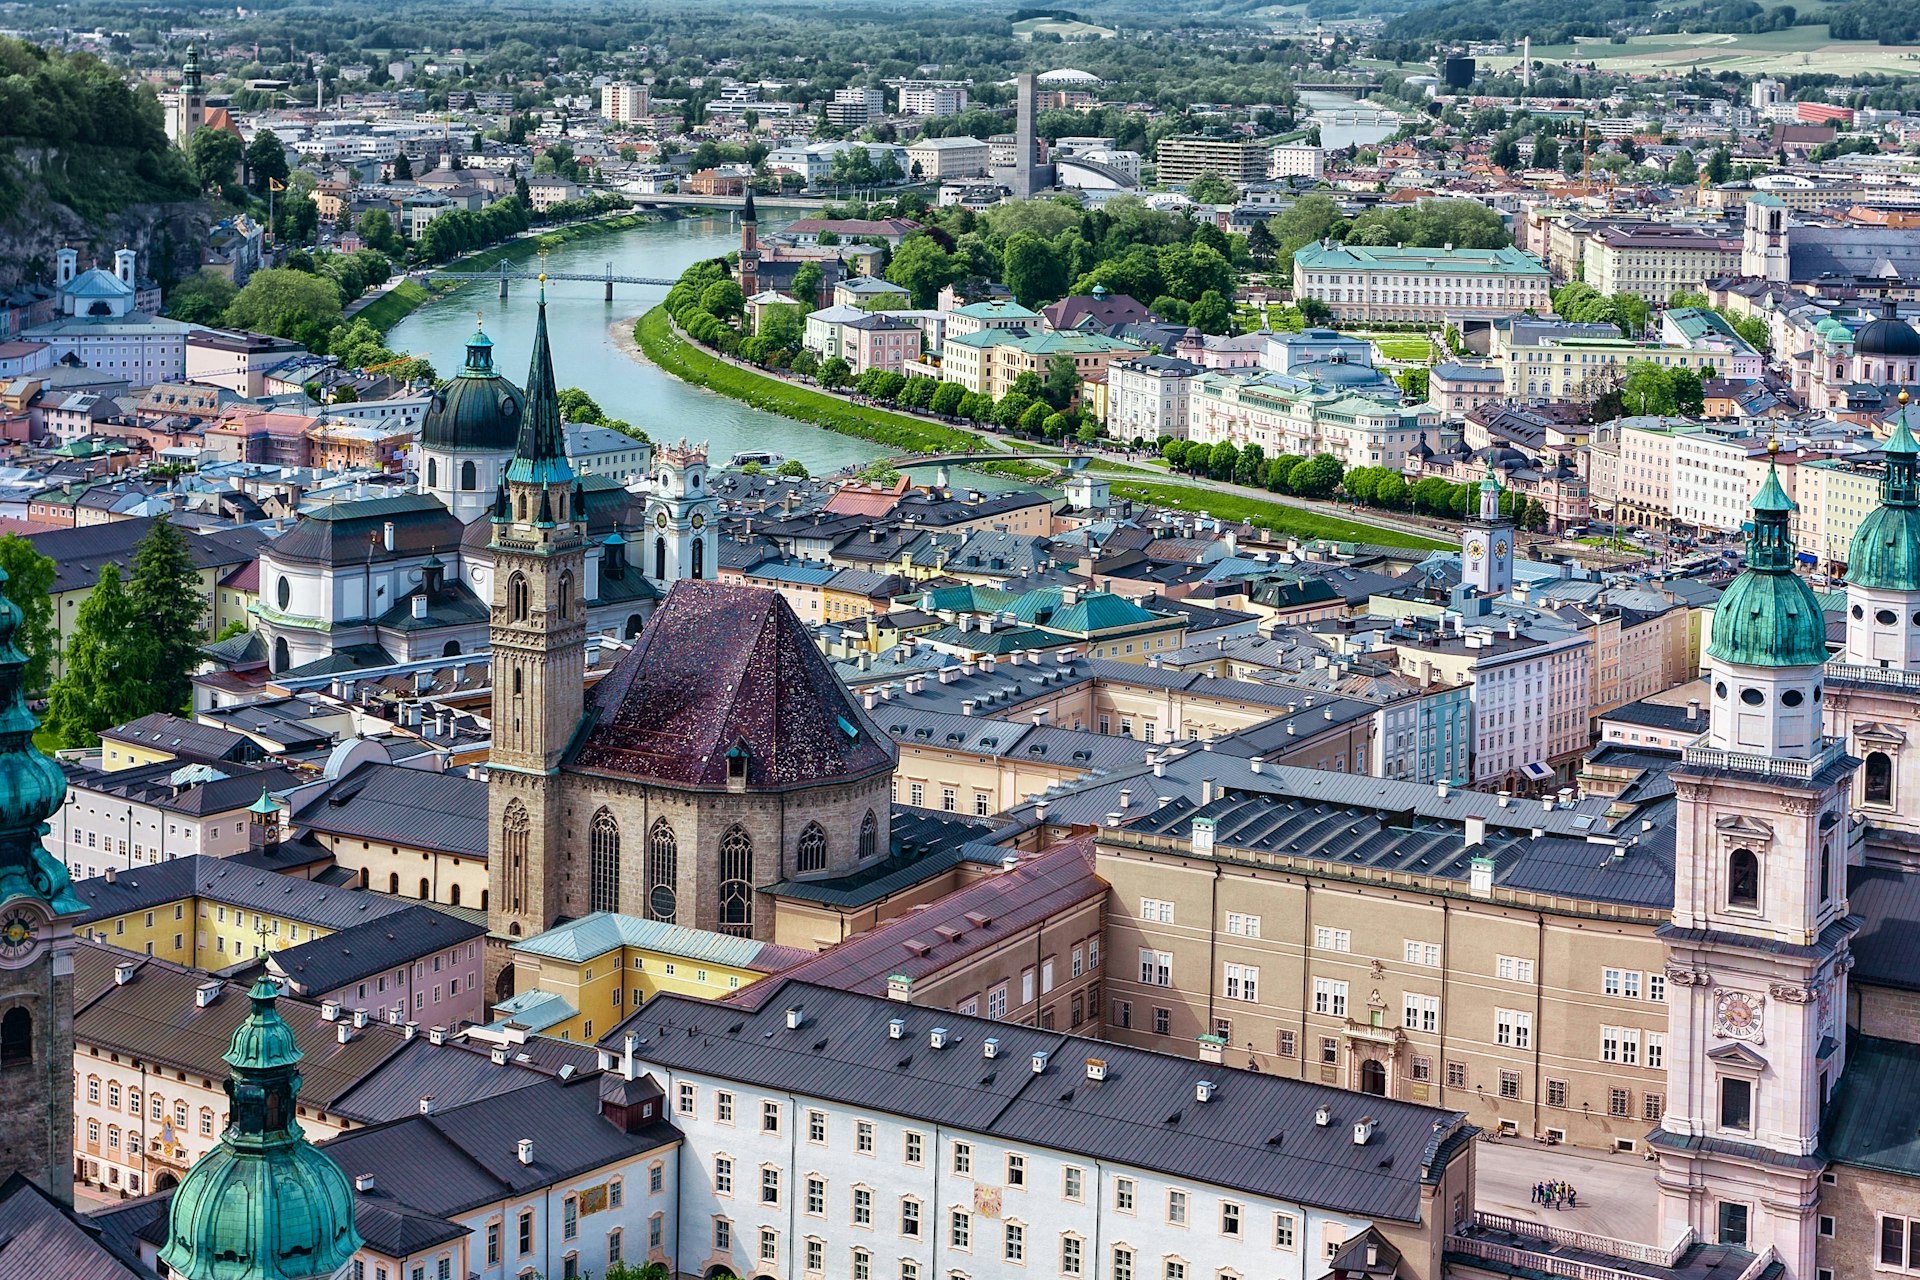 Historic buildings in Salzburg, Austria